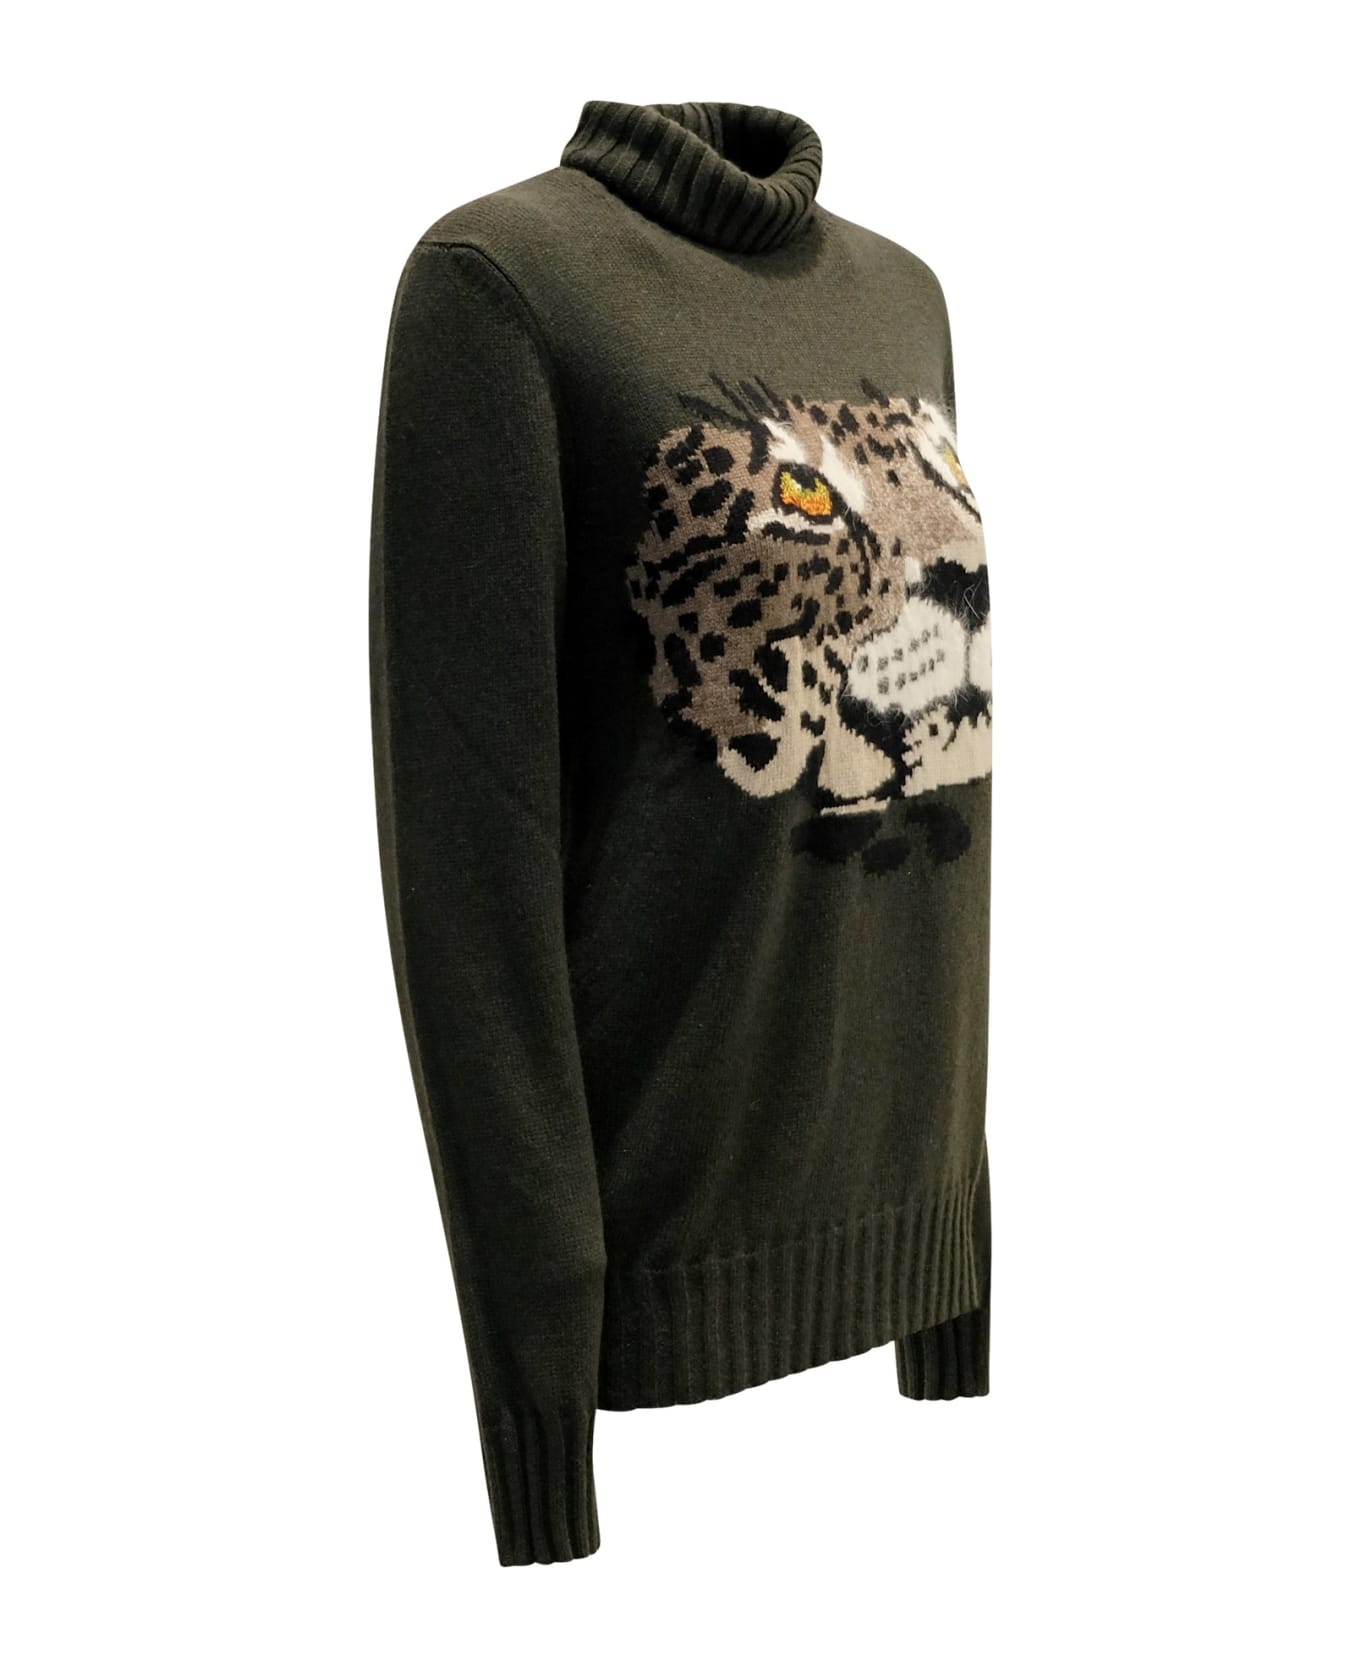 Parosh Lachloe Fantasy Olive Sweater ニットウェア